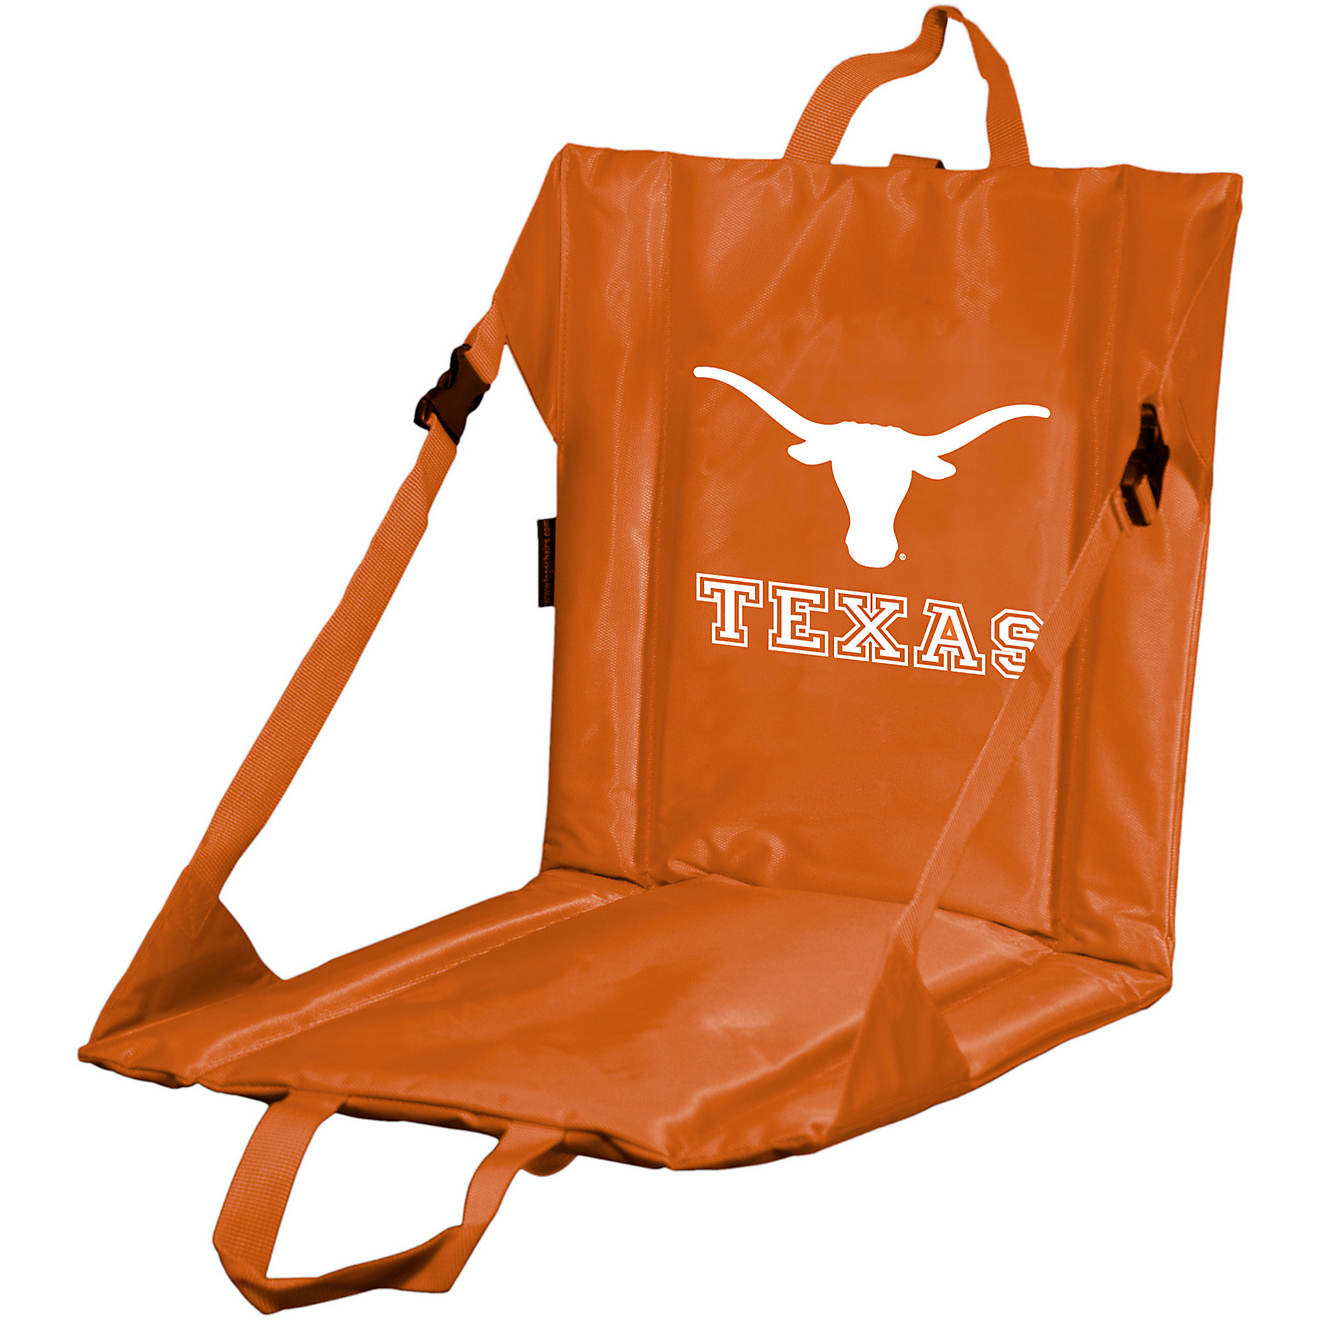 The chair with the Texas Longhorn team logo